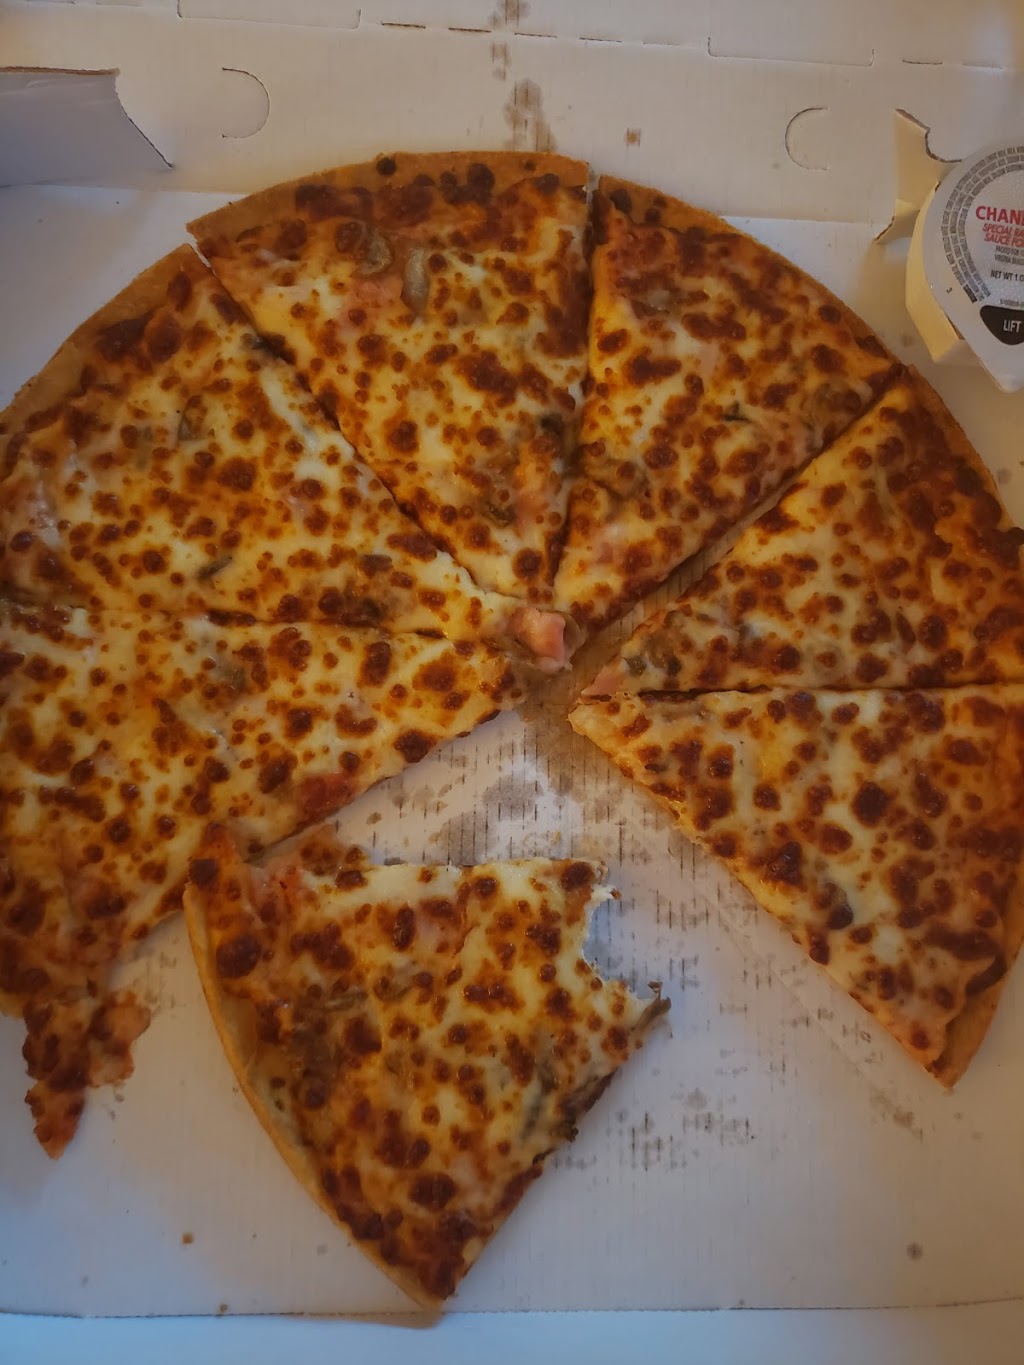 Chanellos Pizza #33 | 1122 George Washington Hwy N, Chesapeake, VA 23323, USA | Phone: (757) 485-1300